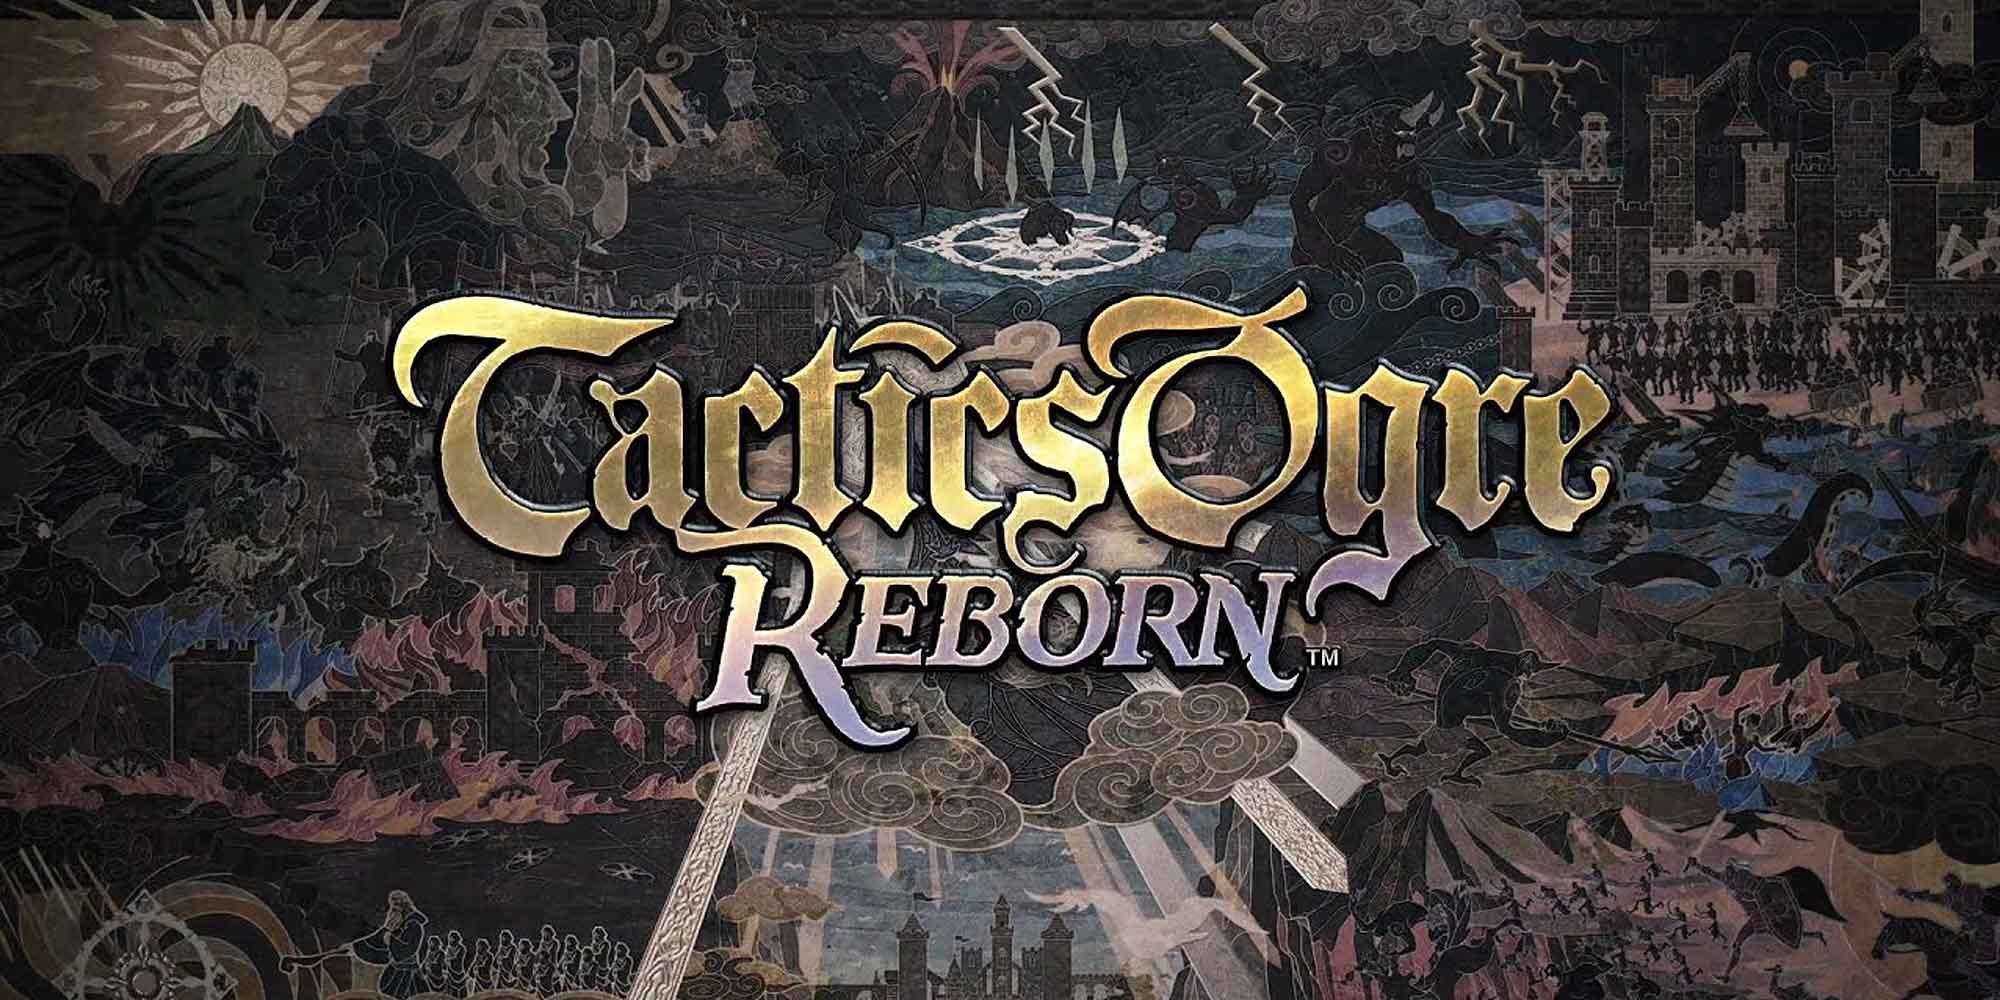 The title screen image for Tactics Ogre Reborn